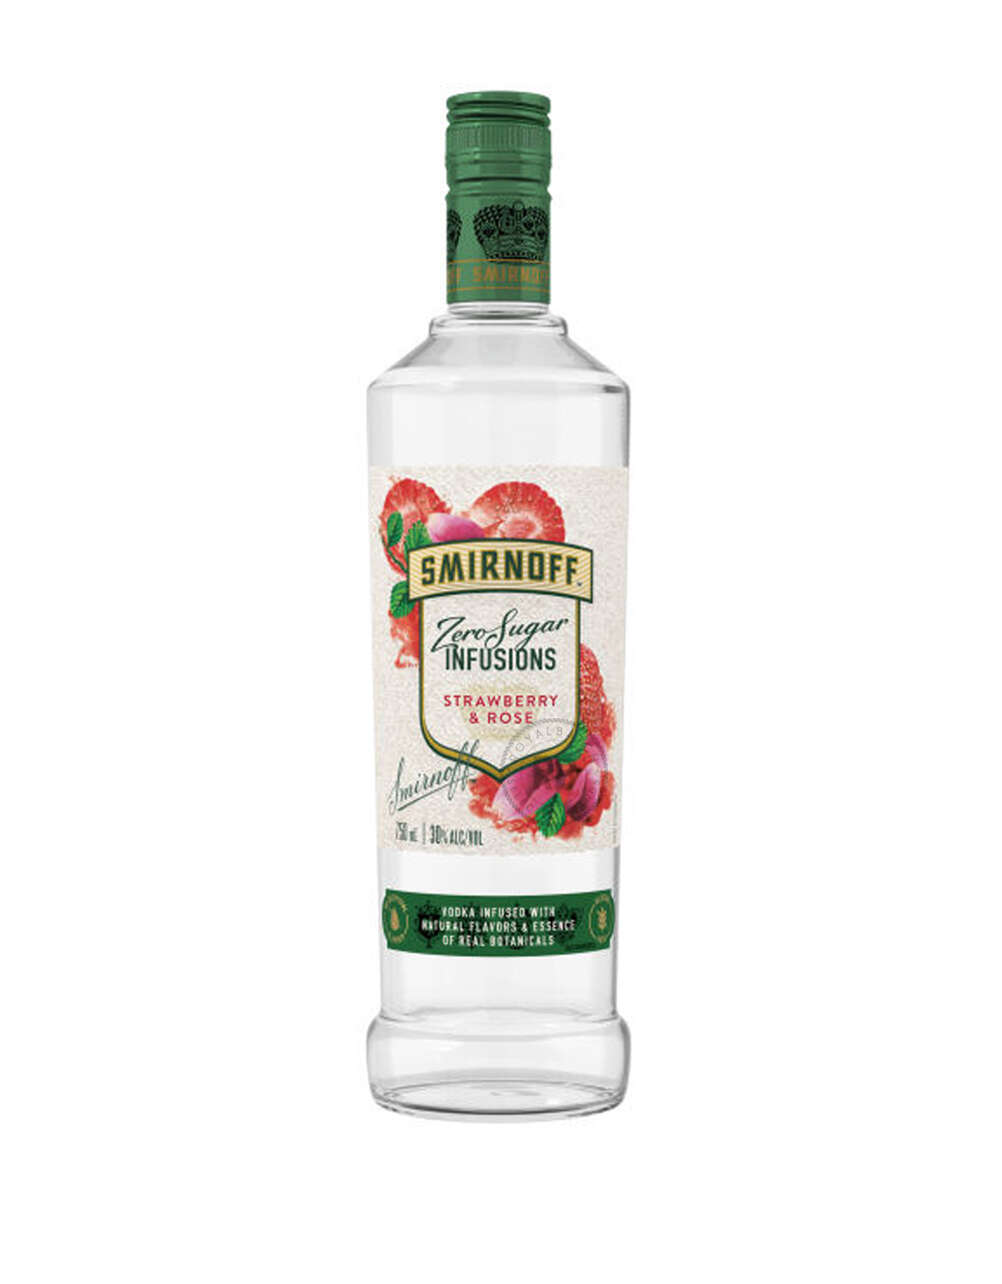 Smirnoff Infusions Strawberry Rose Vodka